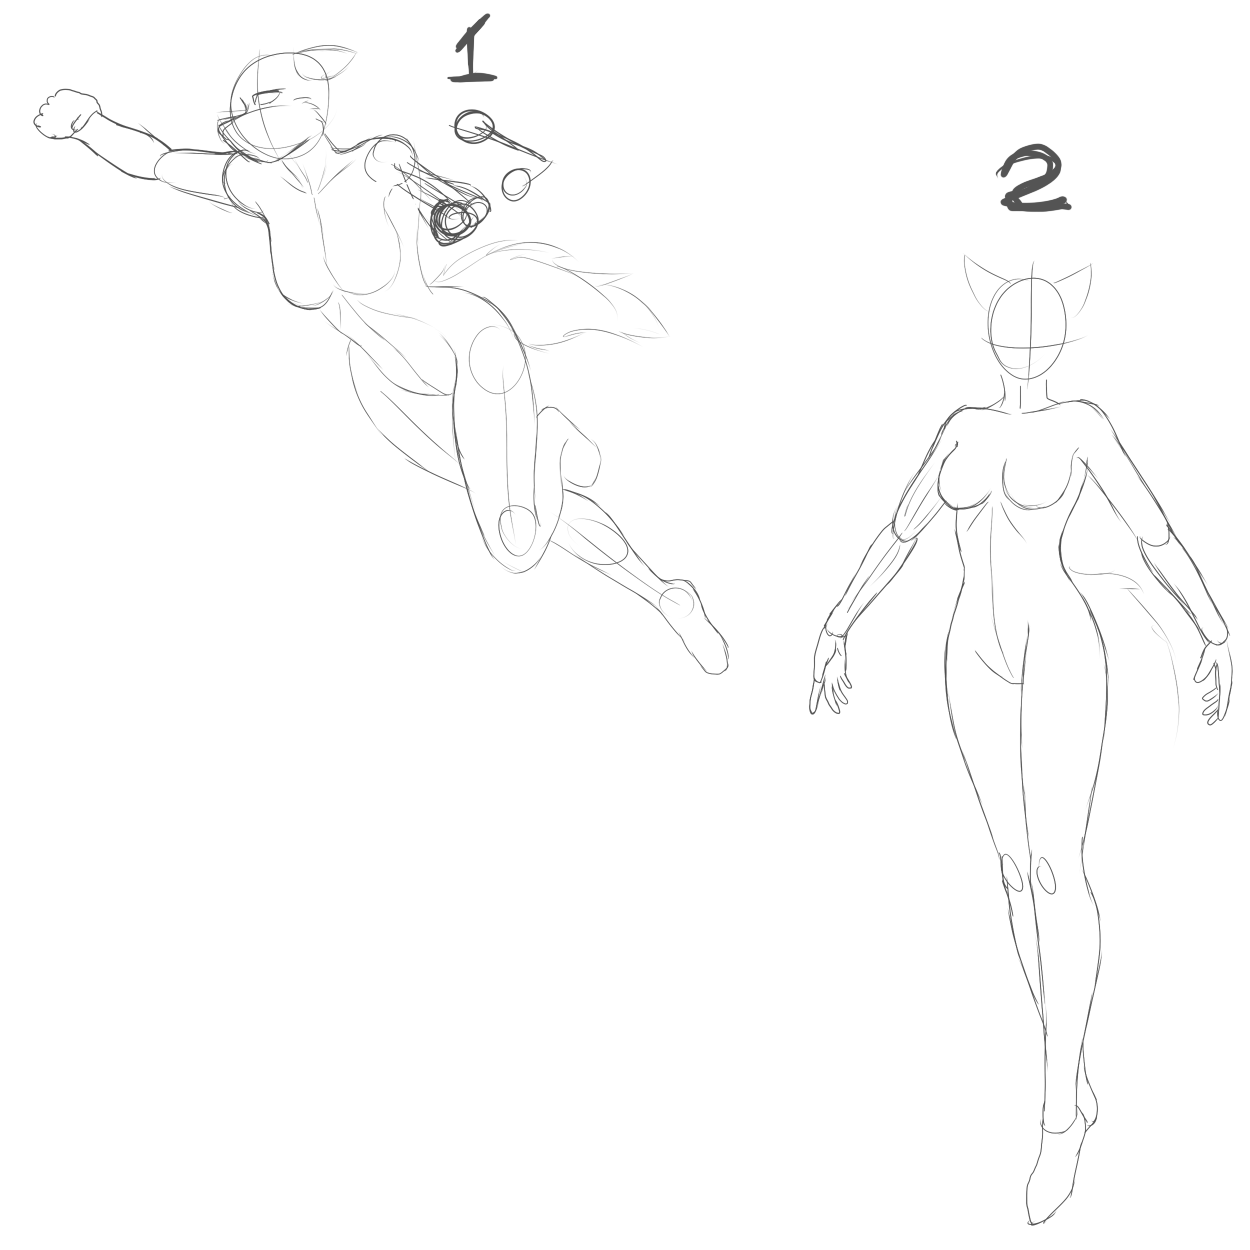 Hero Poses - Female flying pose | PoseMy.Art